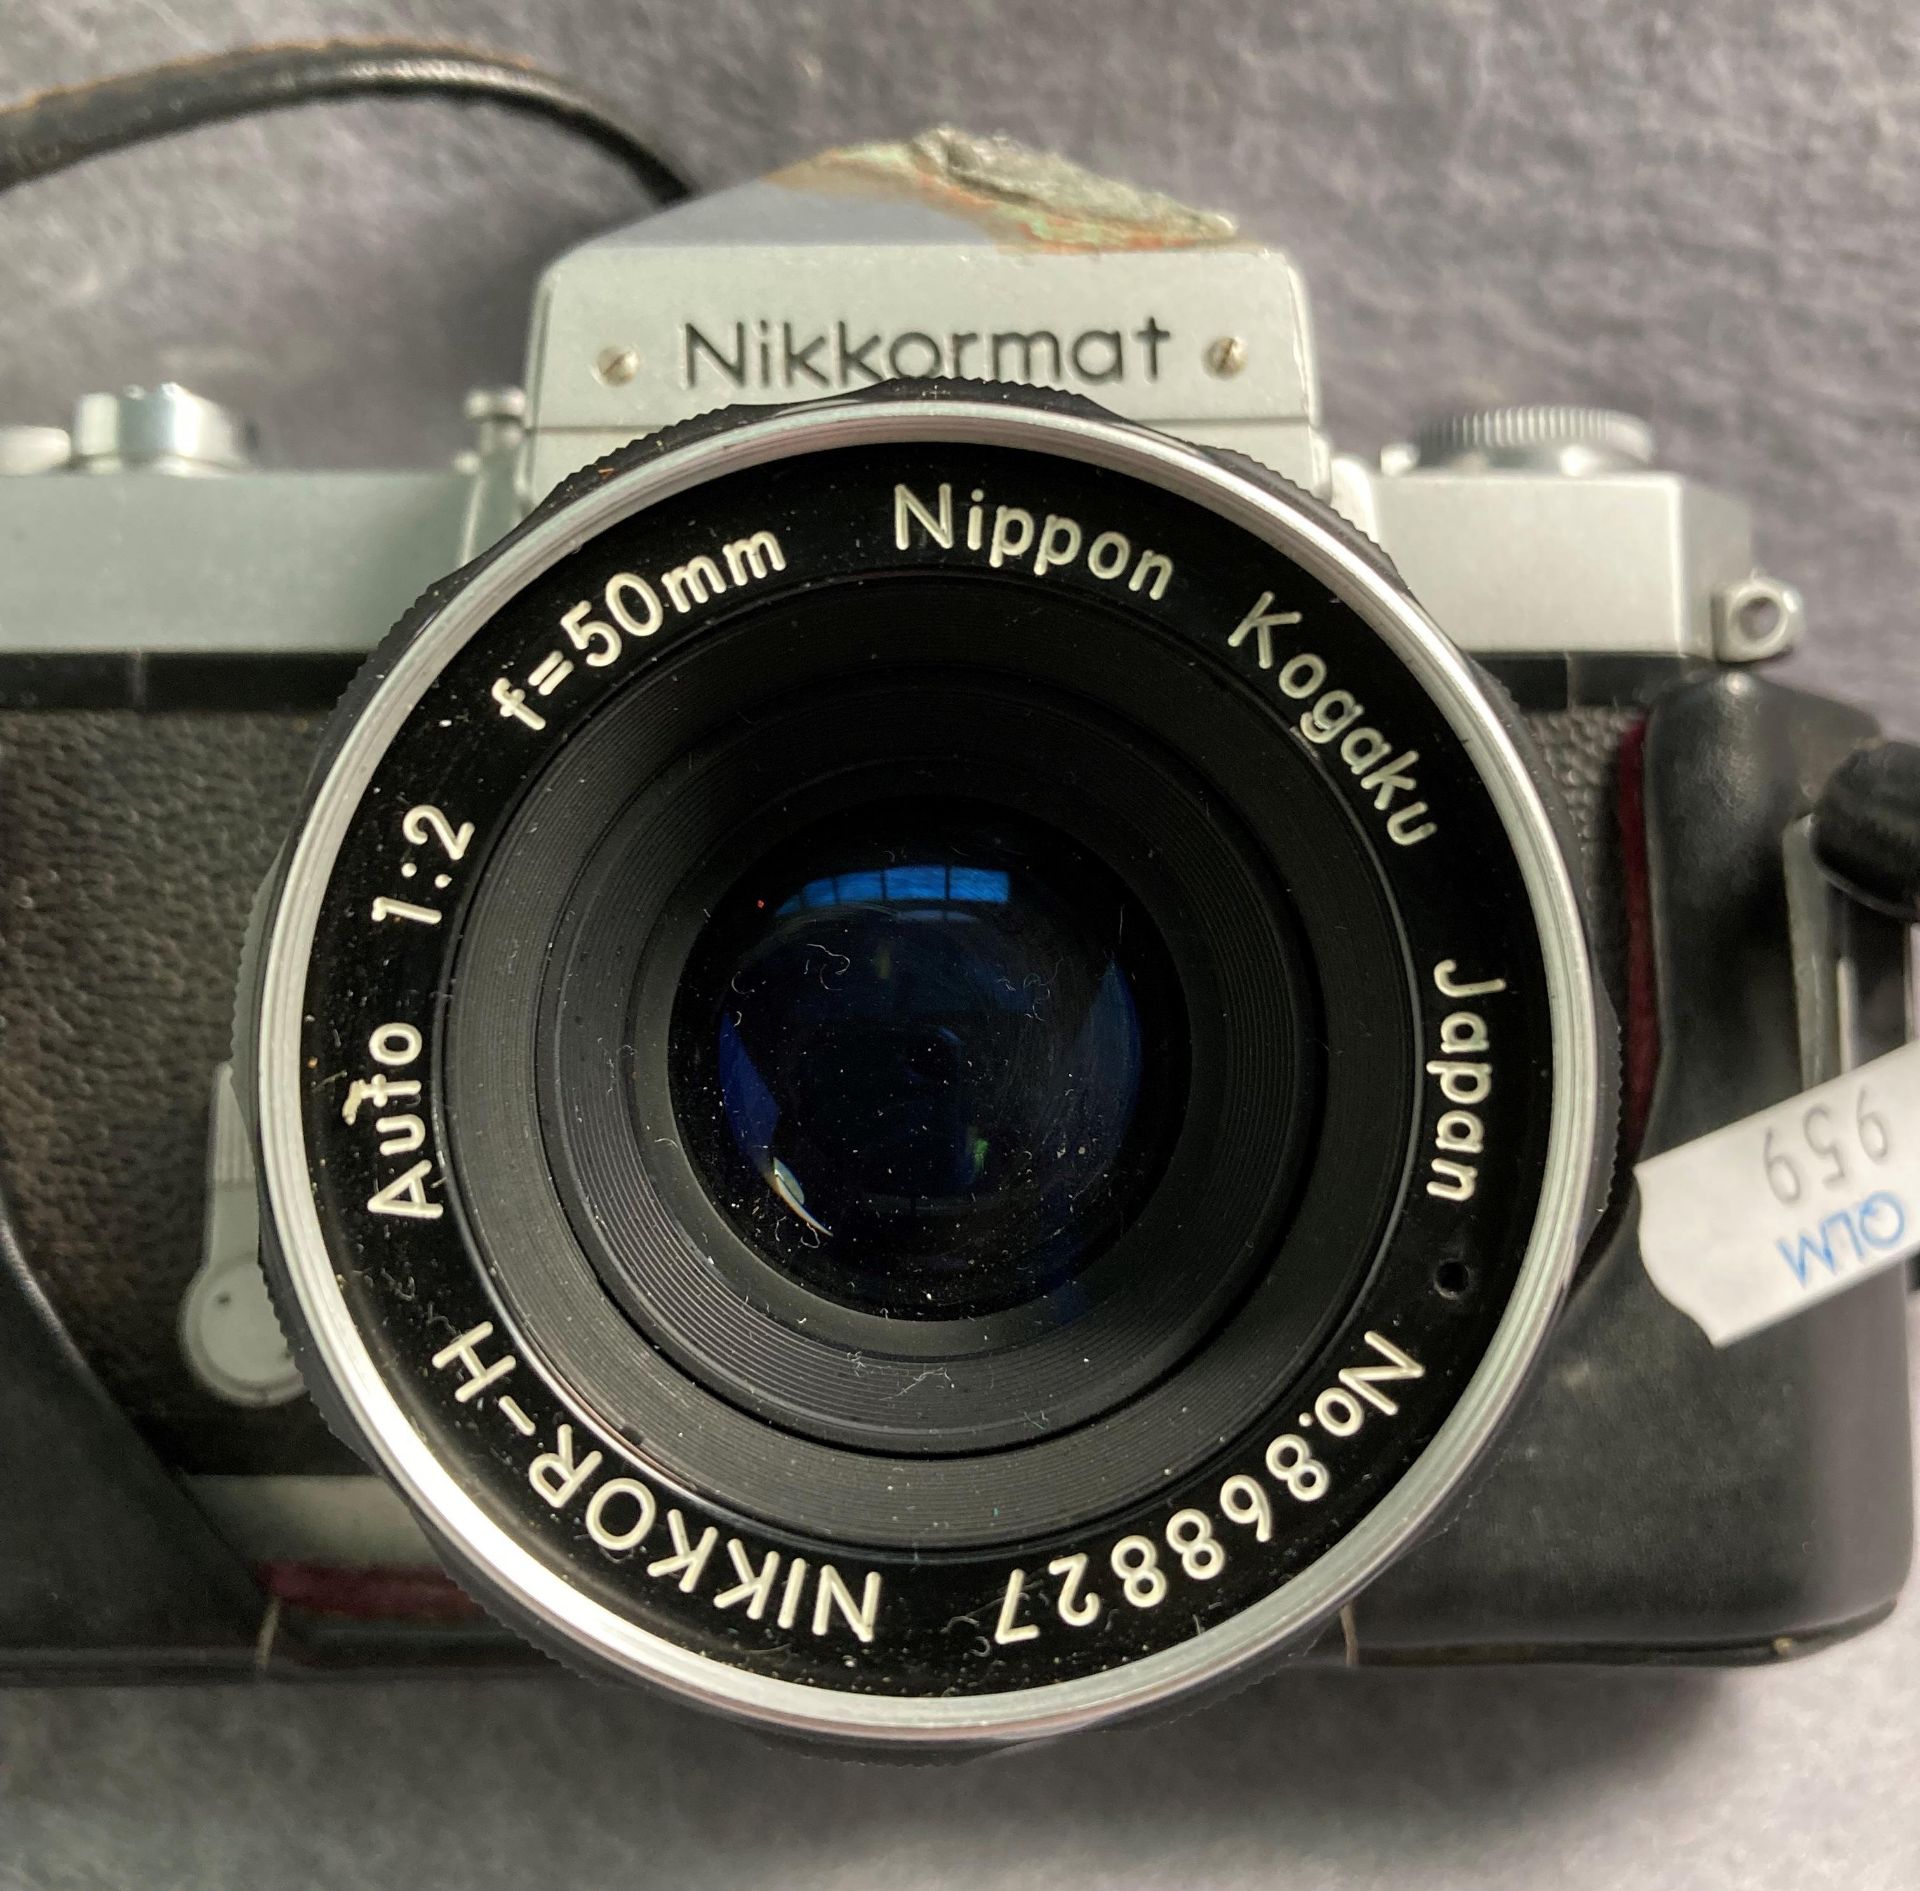 Nikkormat Nikon FT3924086 with a Nikkor-H Auto 1:2 f=50mm Nippon Kogaku Japan no. - Image 2 of 5